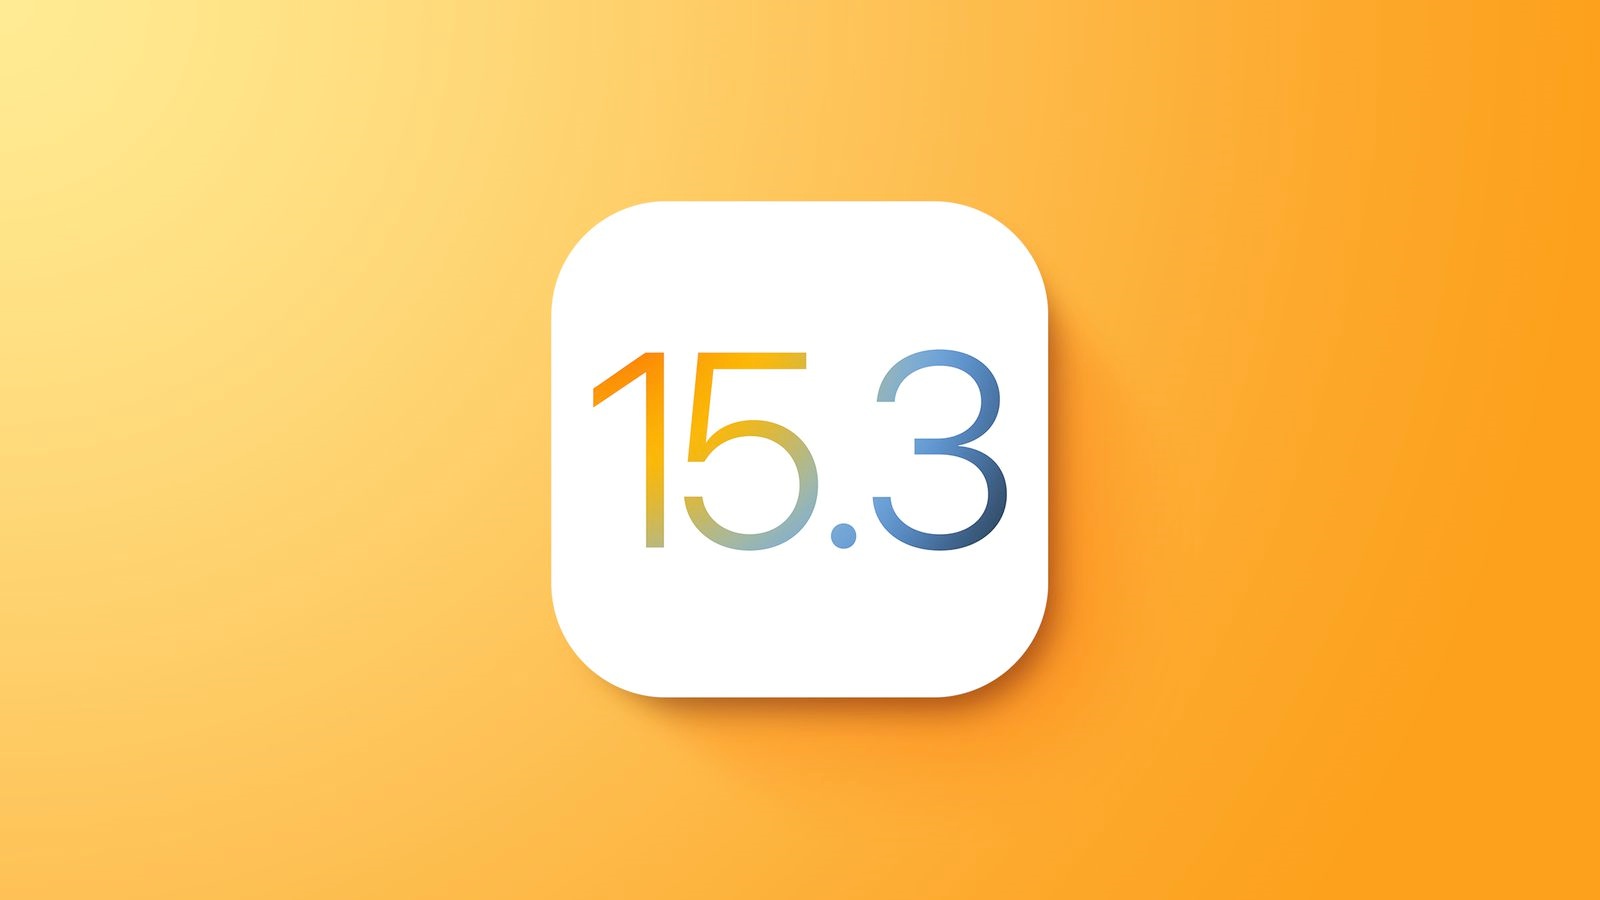 iOS 15.3.1 SORTI Apple Voici la LISTE des actualités iPhone iPad